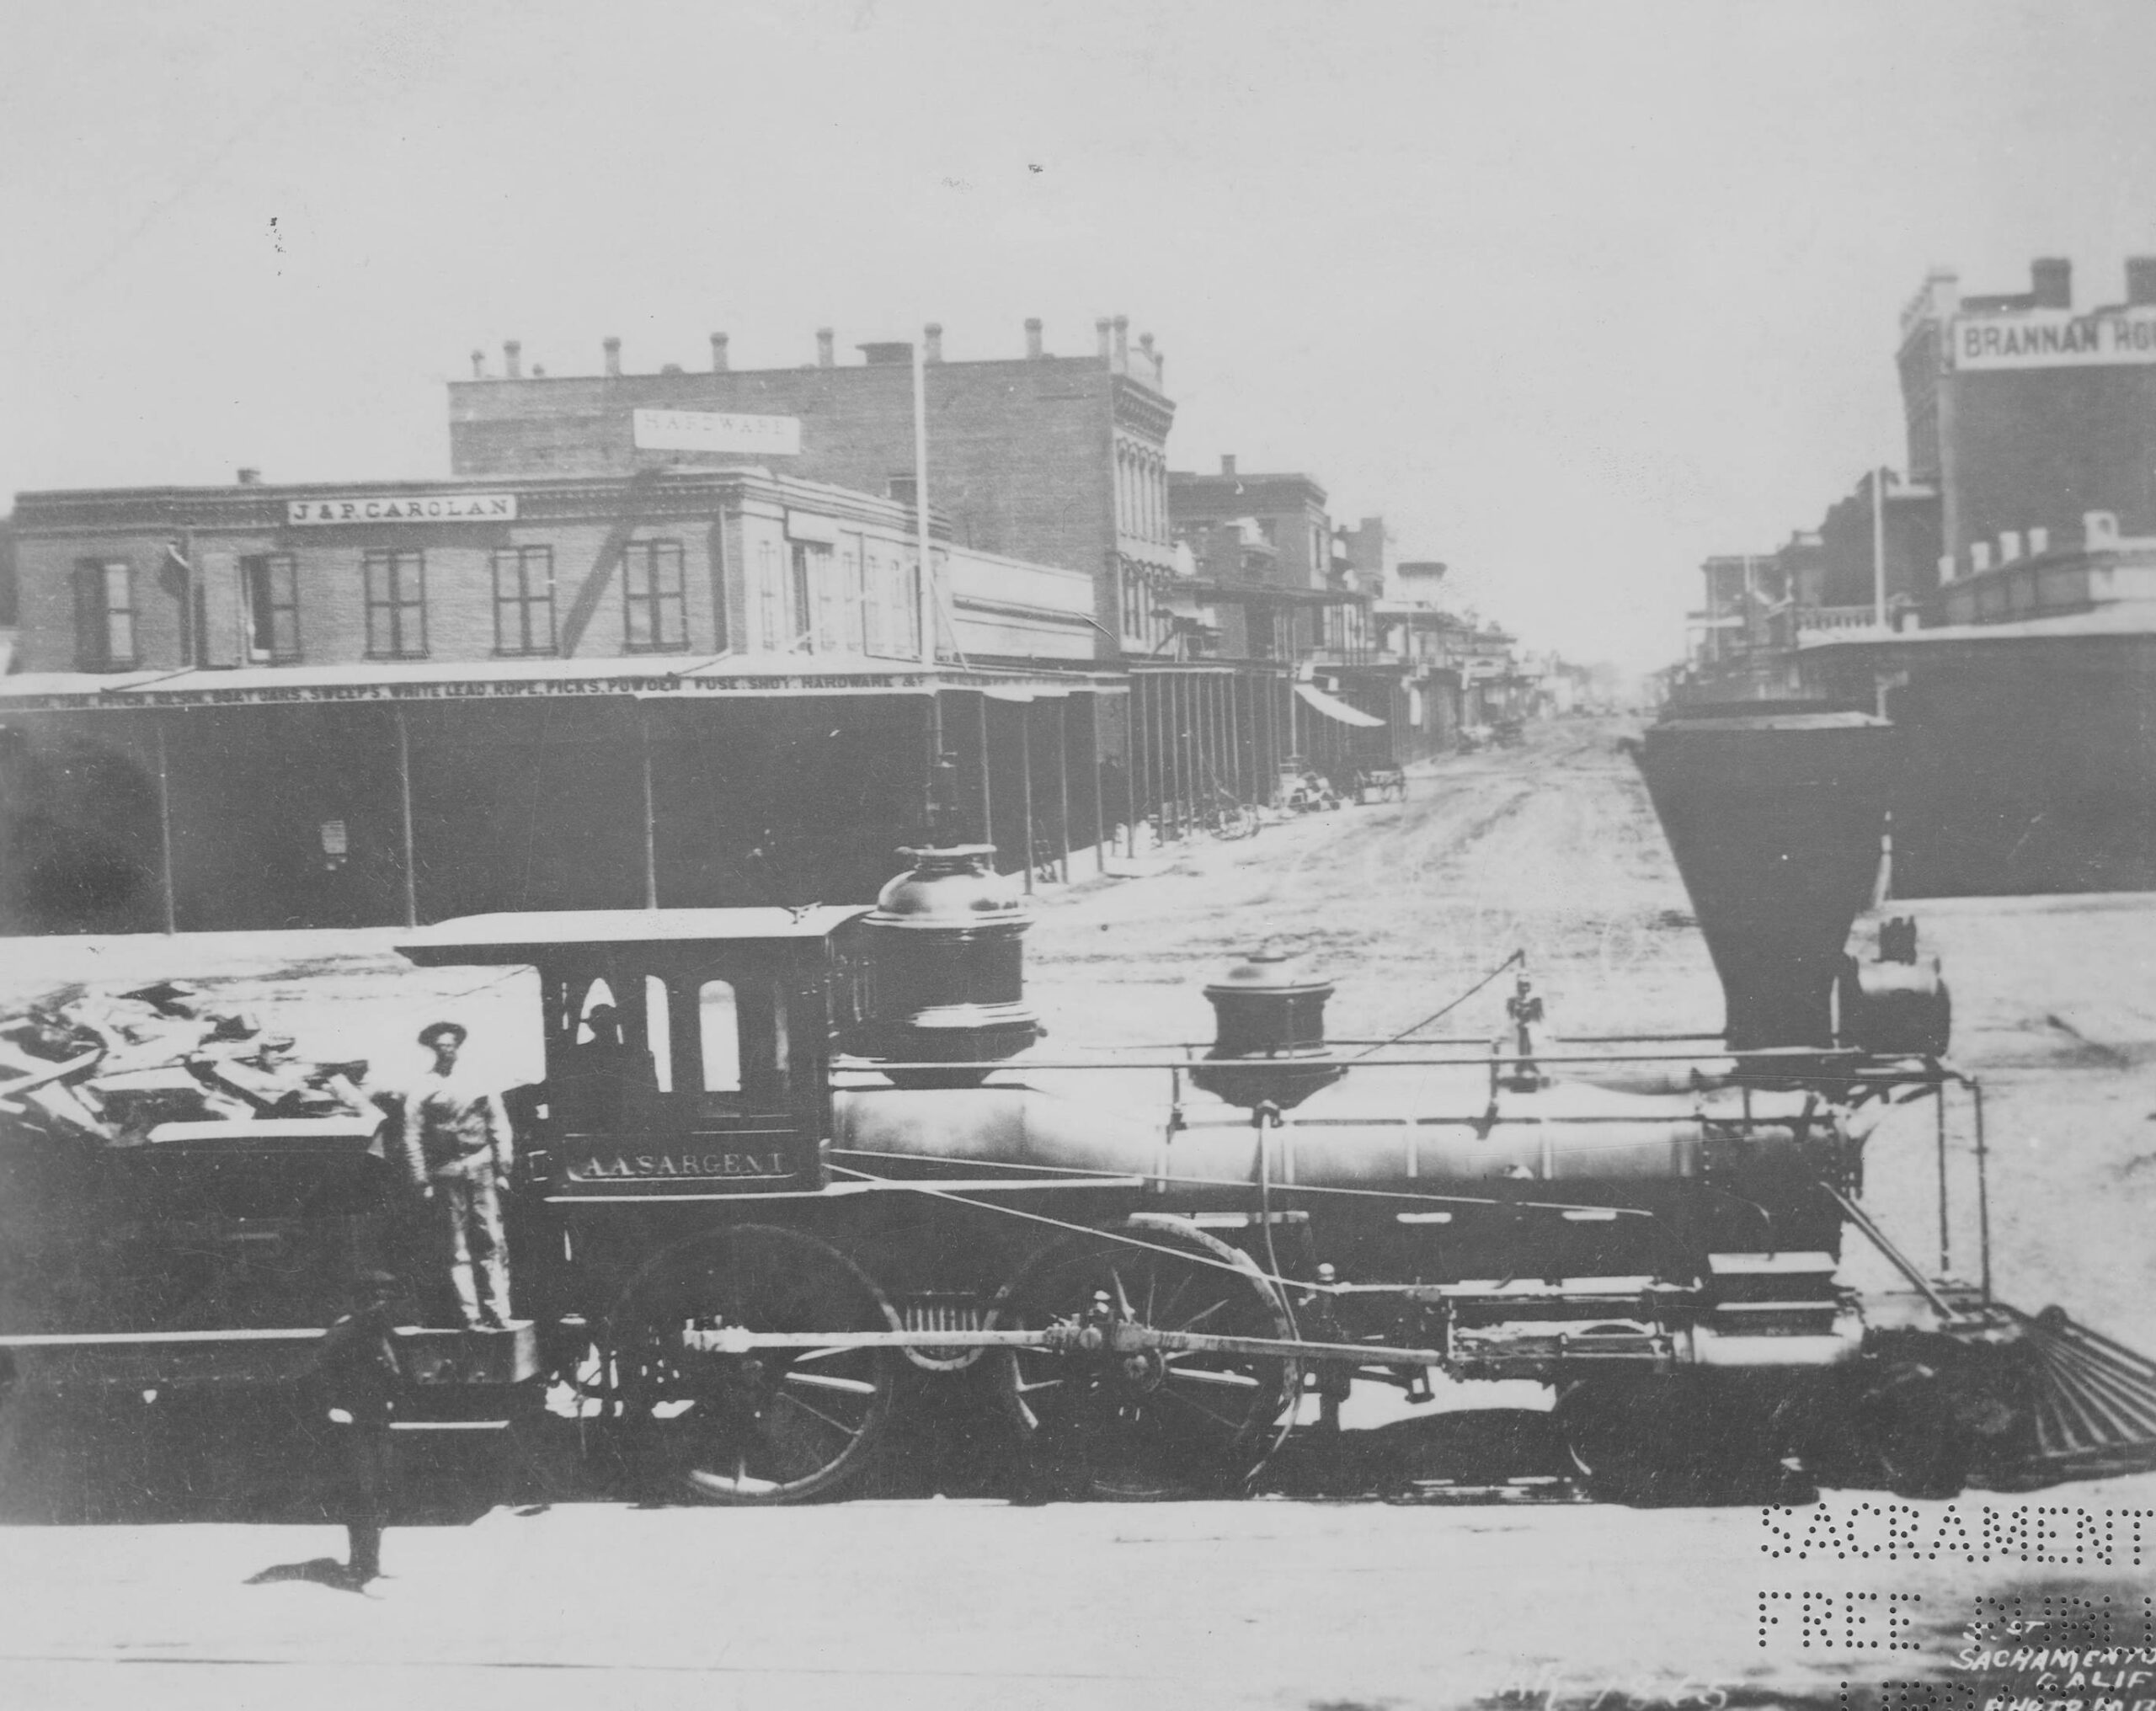 Central Pacific Railroad Locomotive “A.A. Sargent”, 1865